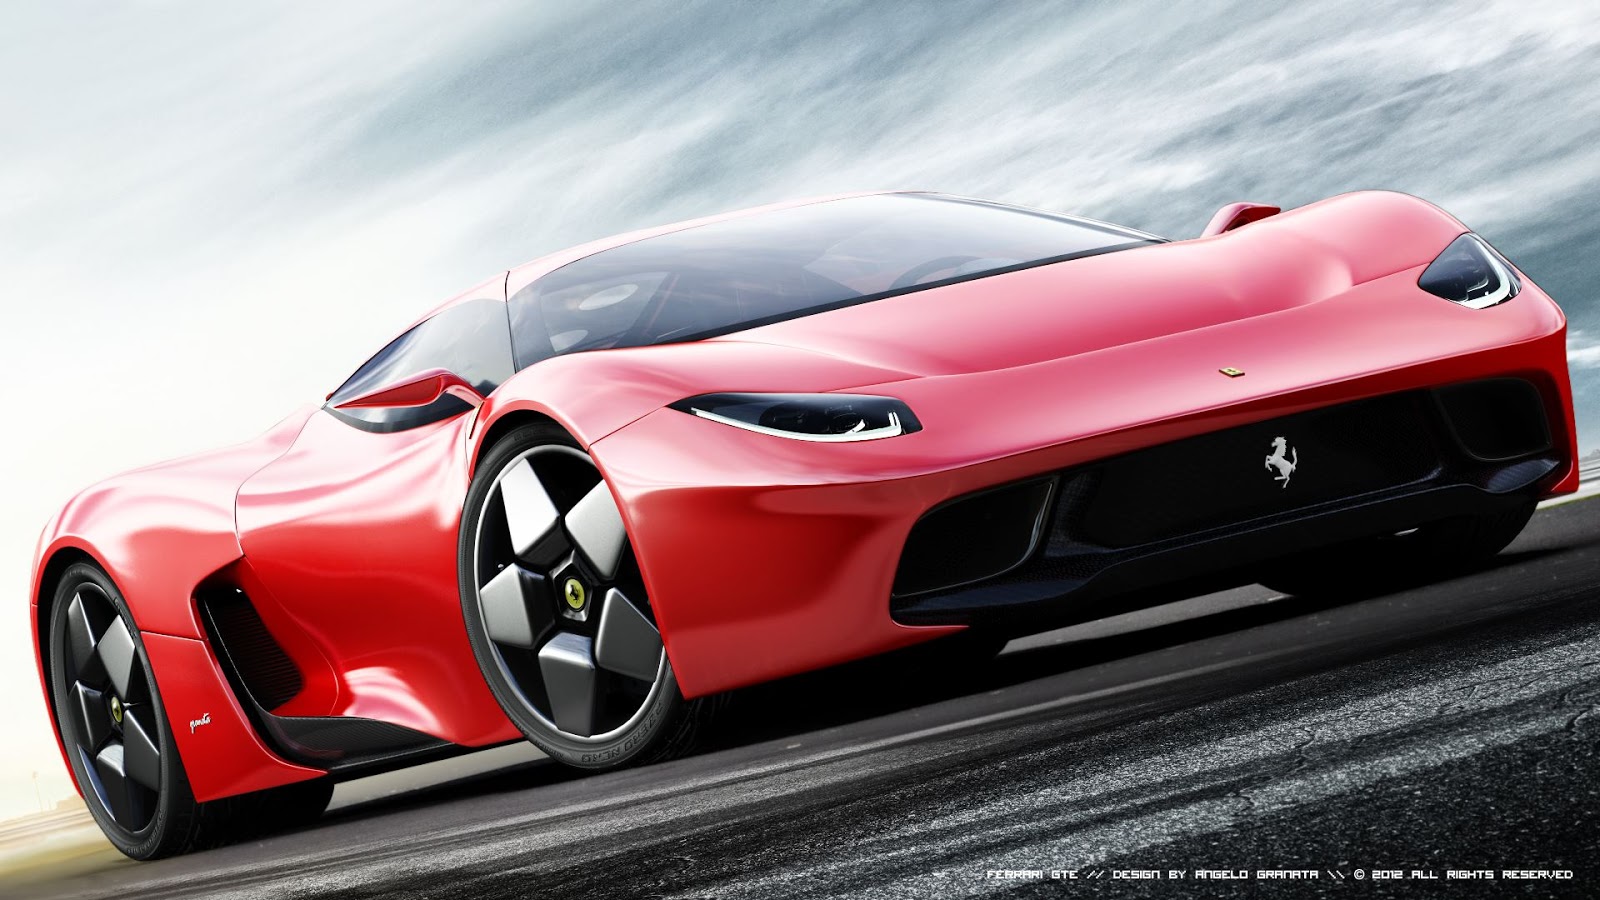 Ferrari gte. Ferrari 488 GTE. Гиперкар Ferrari f80. Феррари 2030 концепт. Ferrari Concept car.